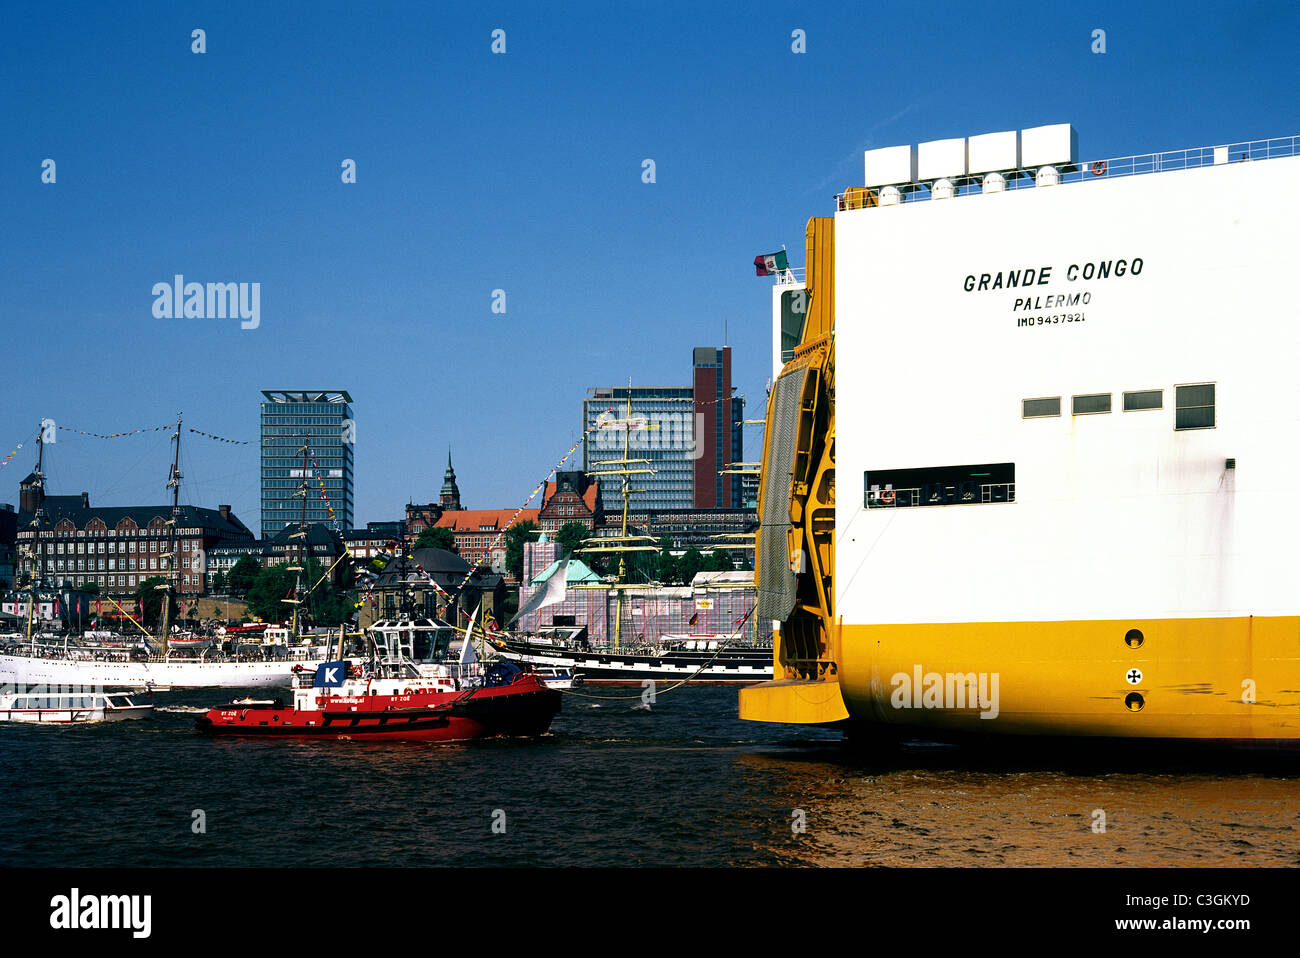 Grimaldi's vehicle transporter Grande Congo passes Landungsbrücken upon arrival in the port of Hamburg. Stock Photo